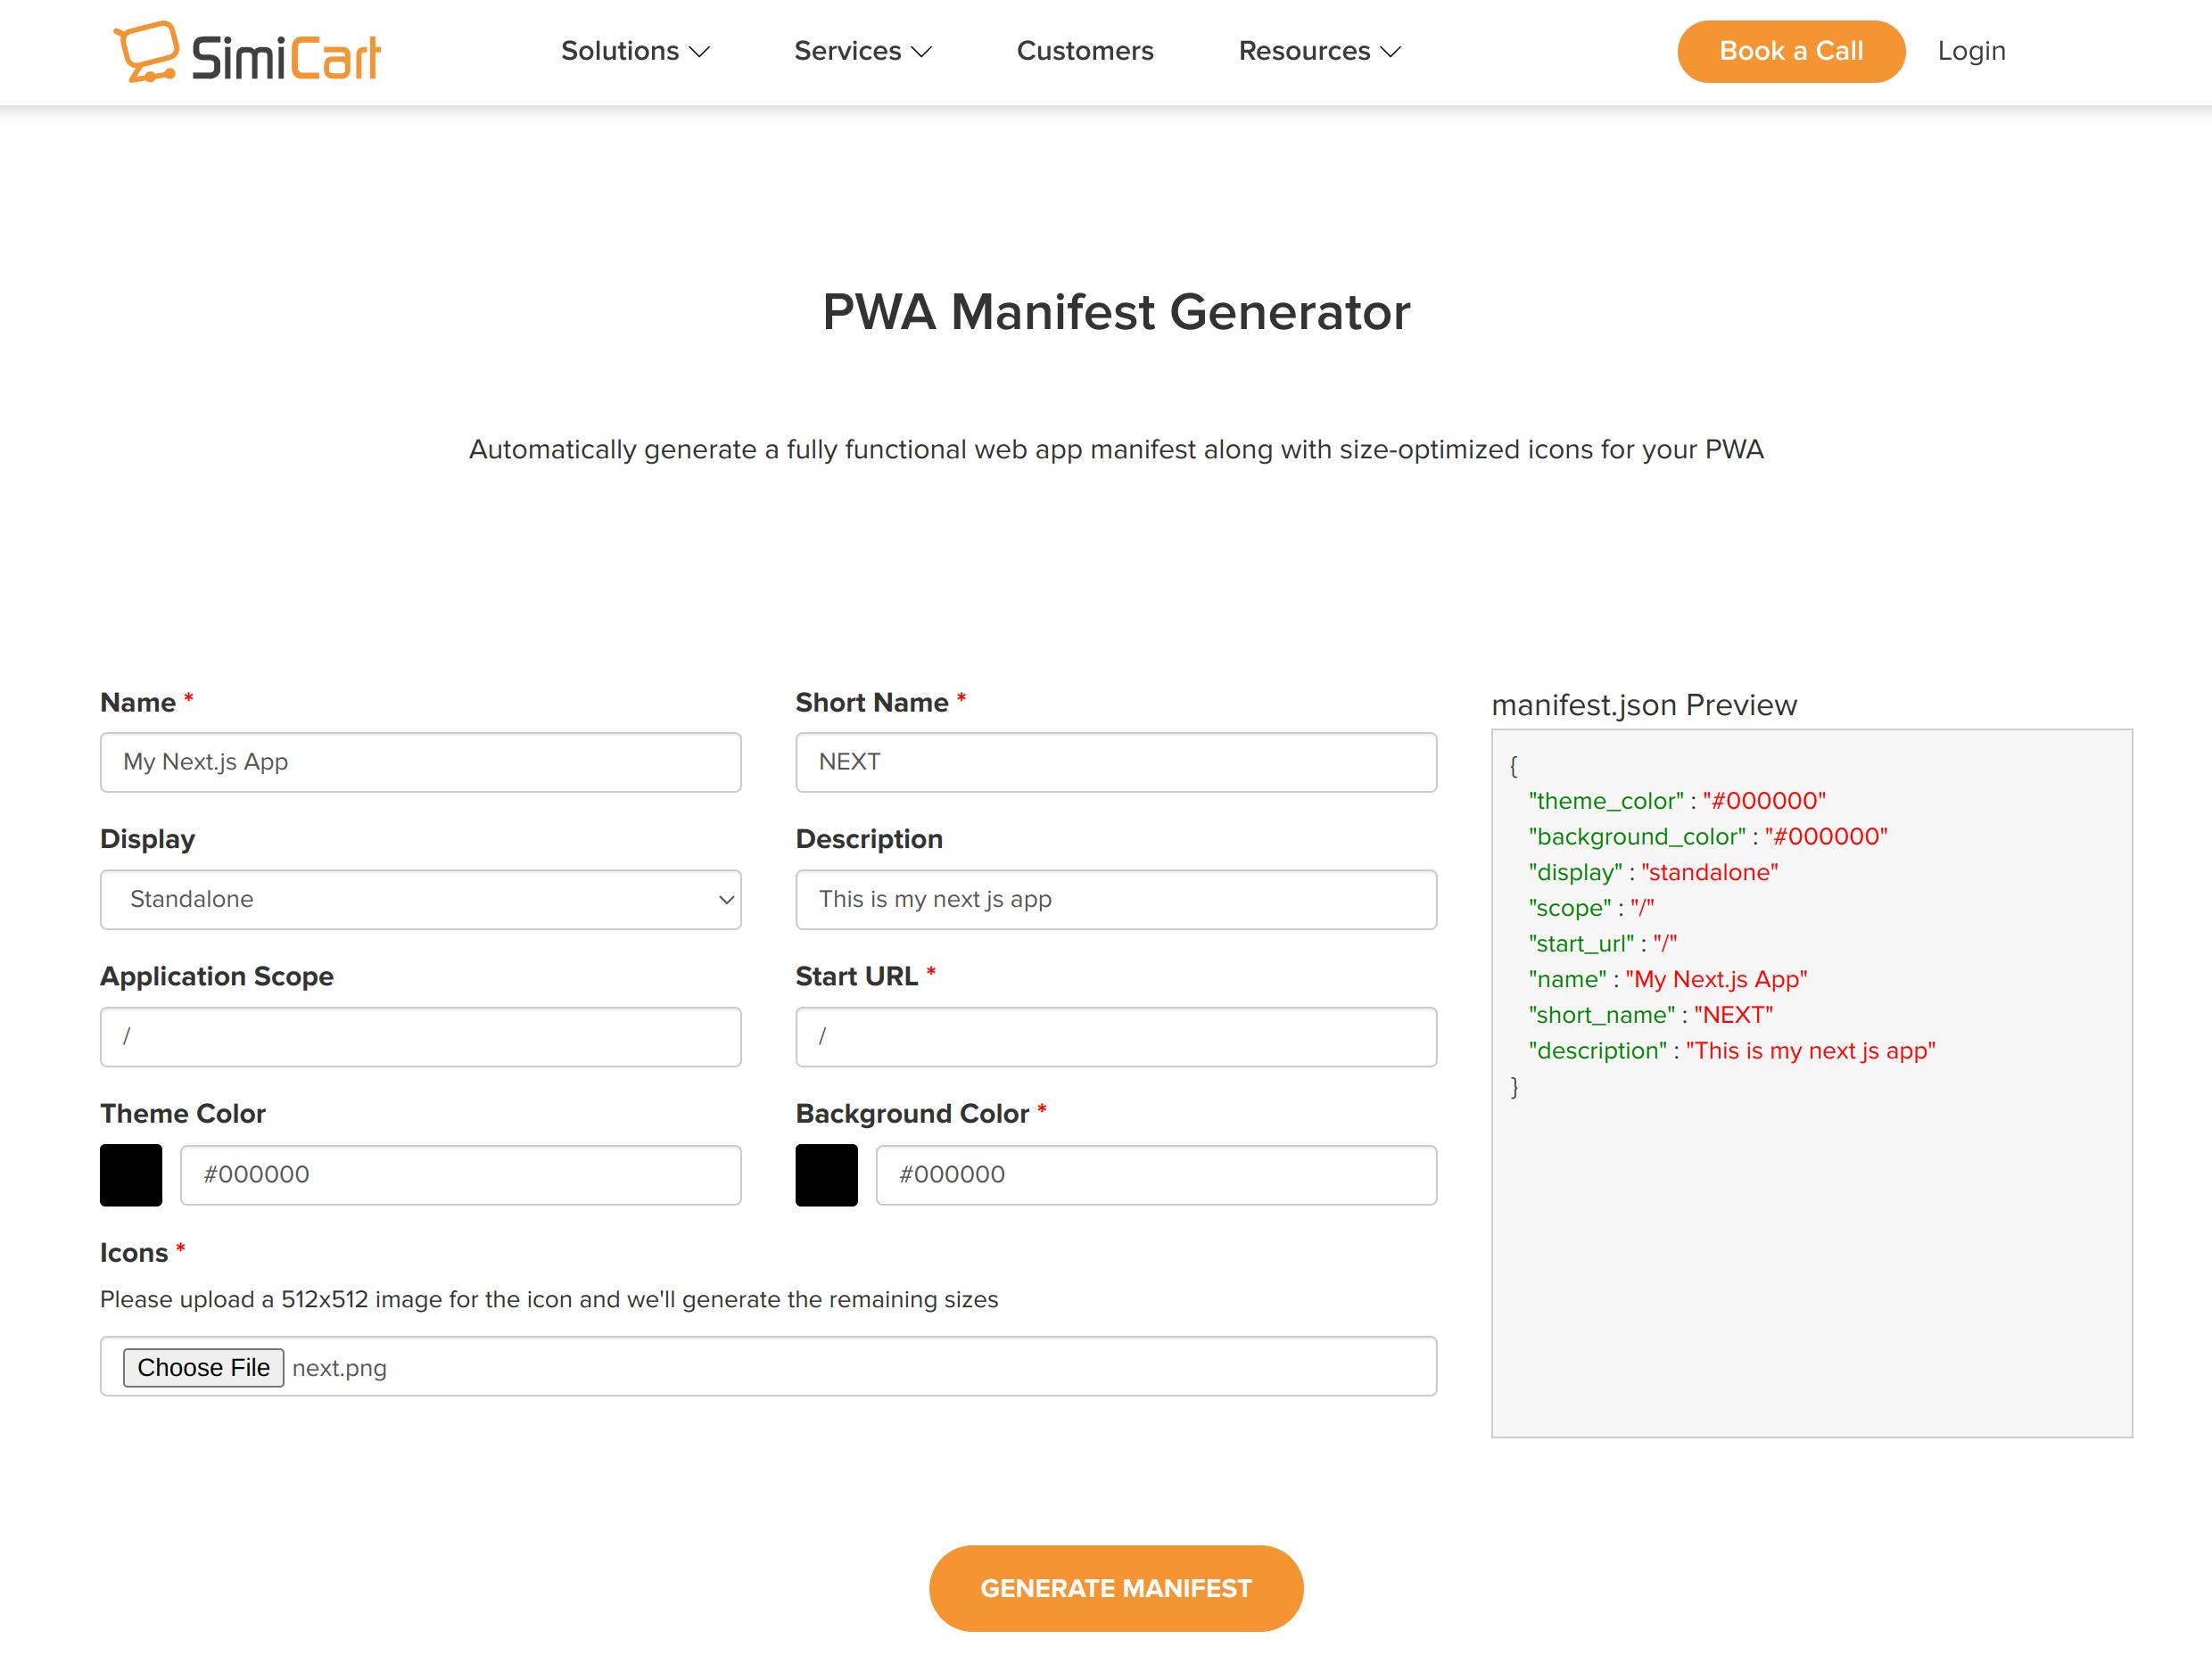 Simi Cart PWA Manifest Generator tool